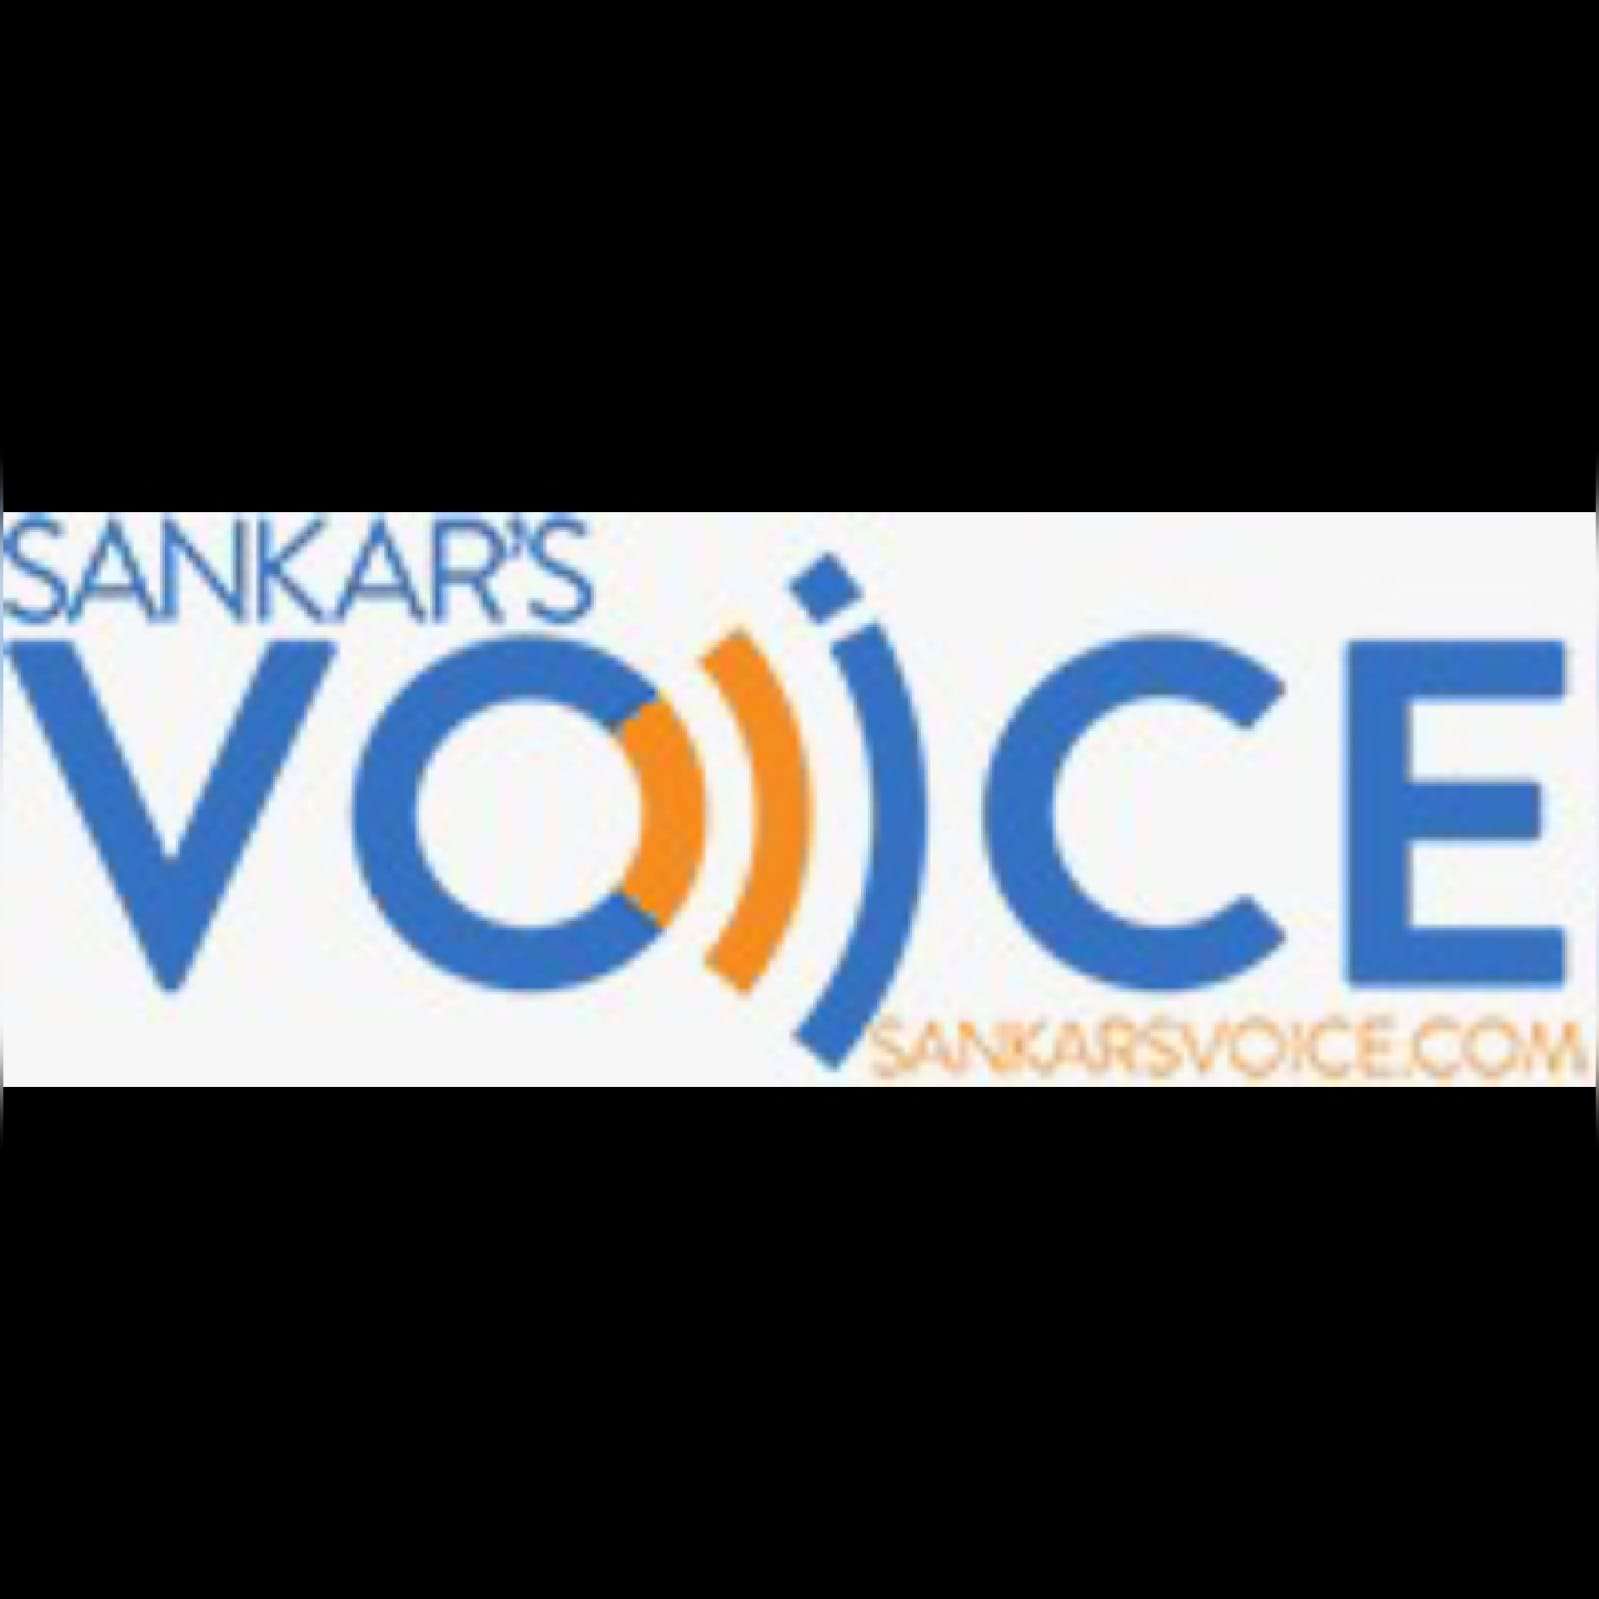 Sankars Voice Profile Picture